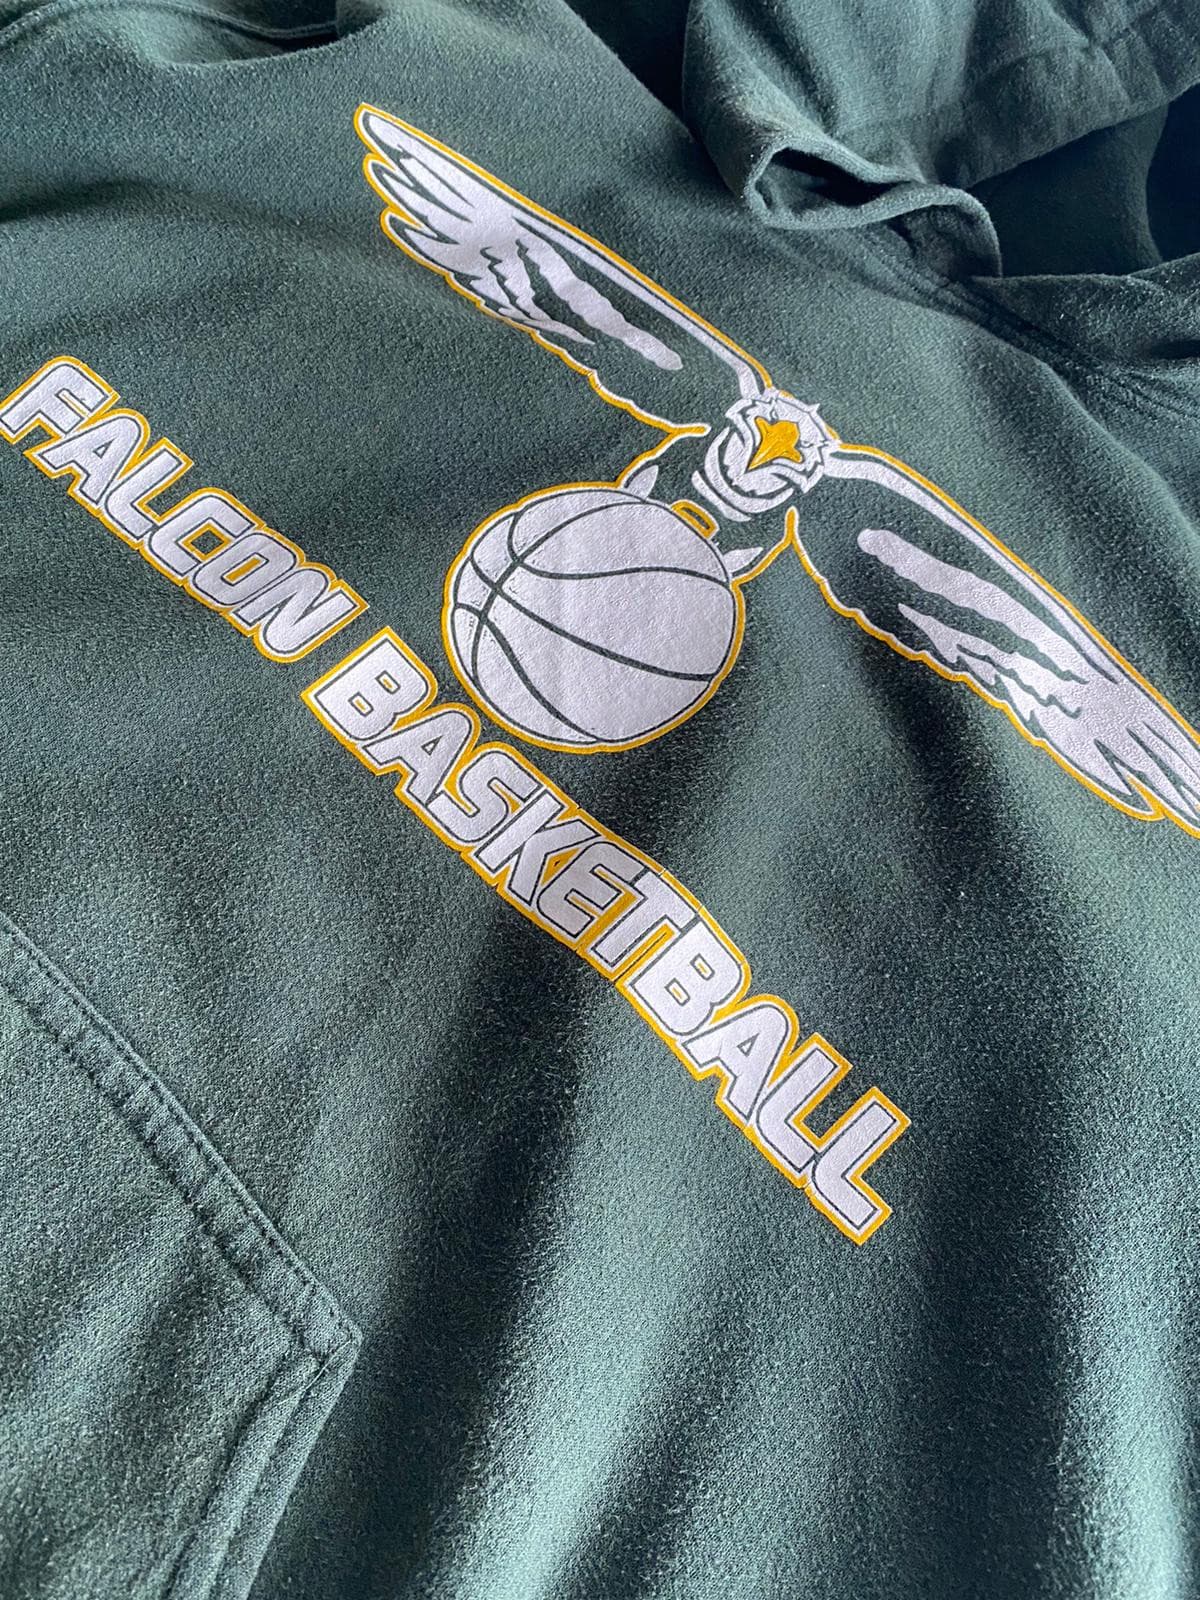 Falcon Basketball Hoodie Green // X-Small - RHAGHOUSE VINTAGE